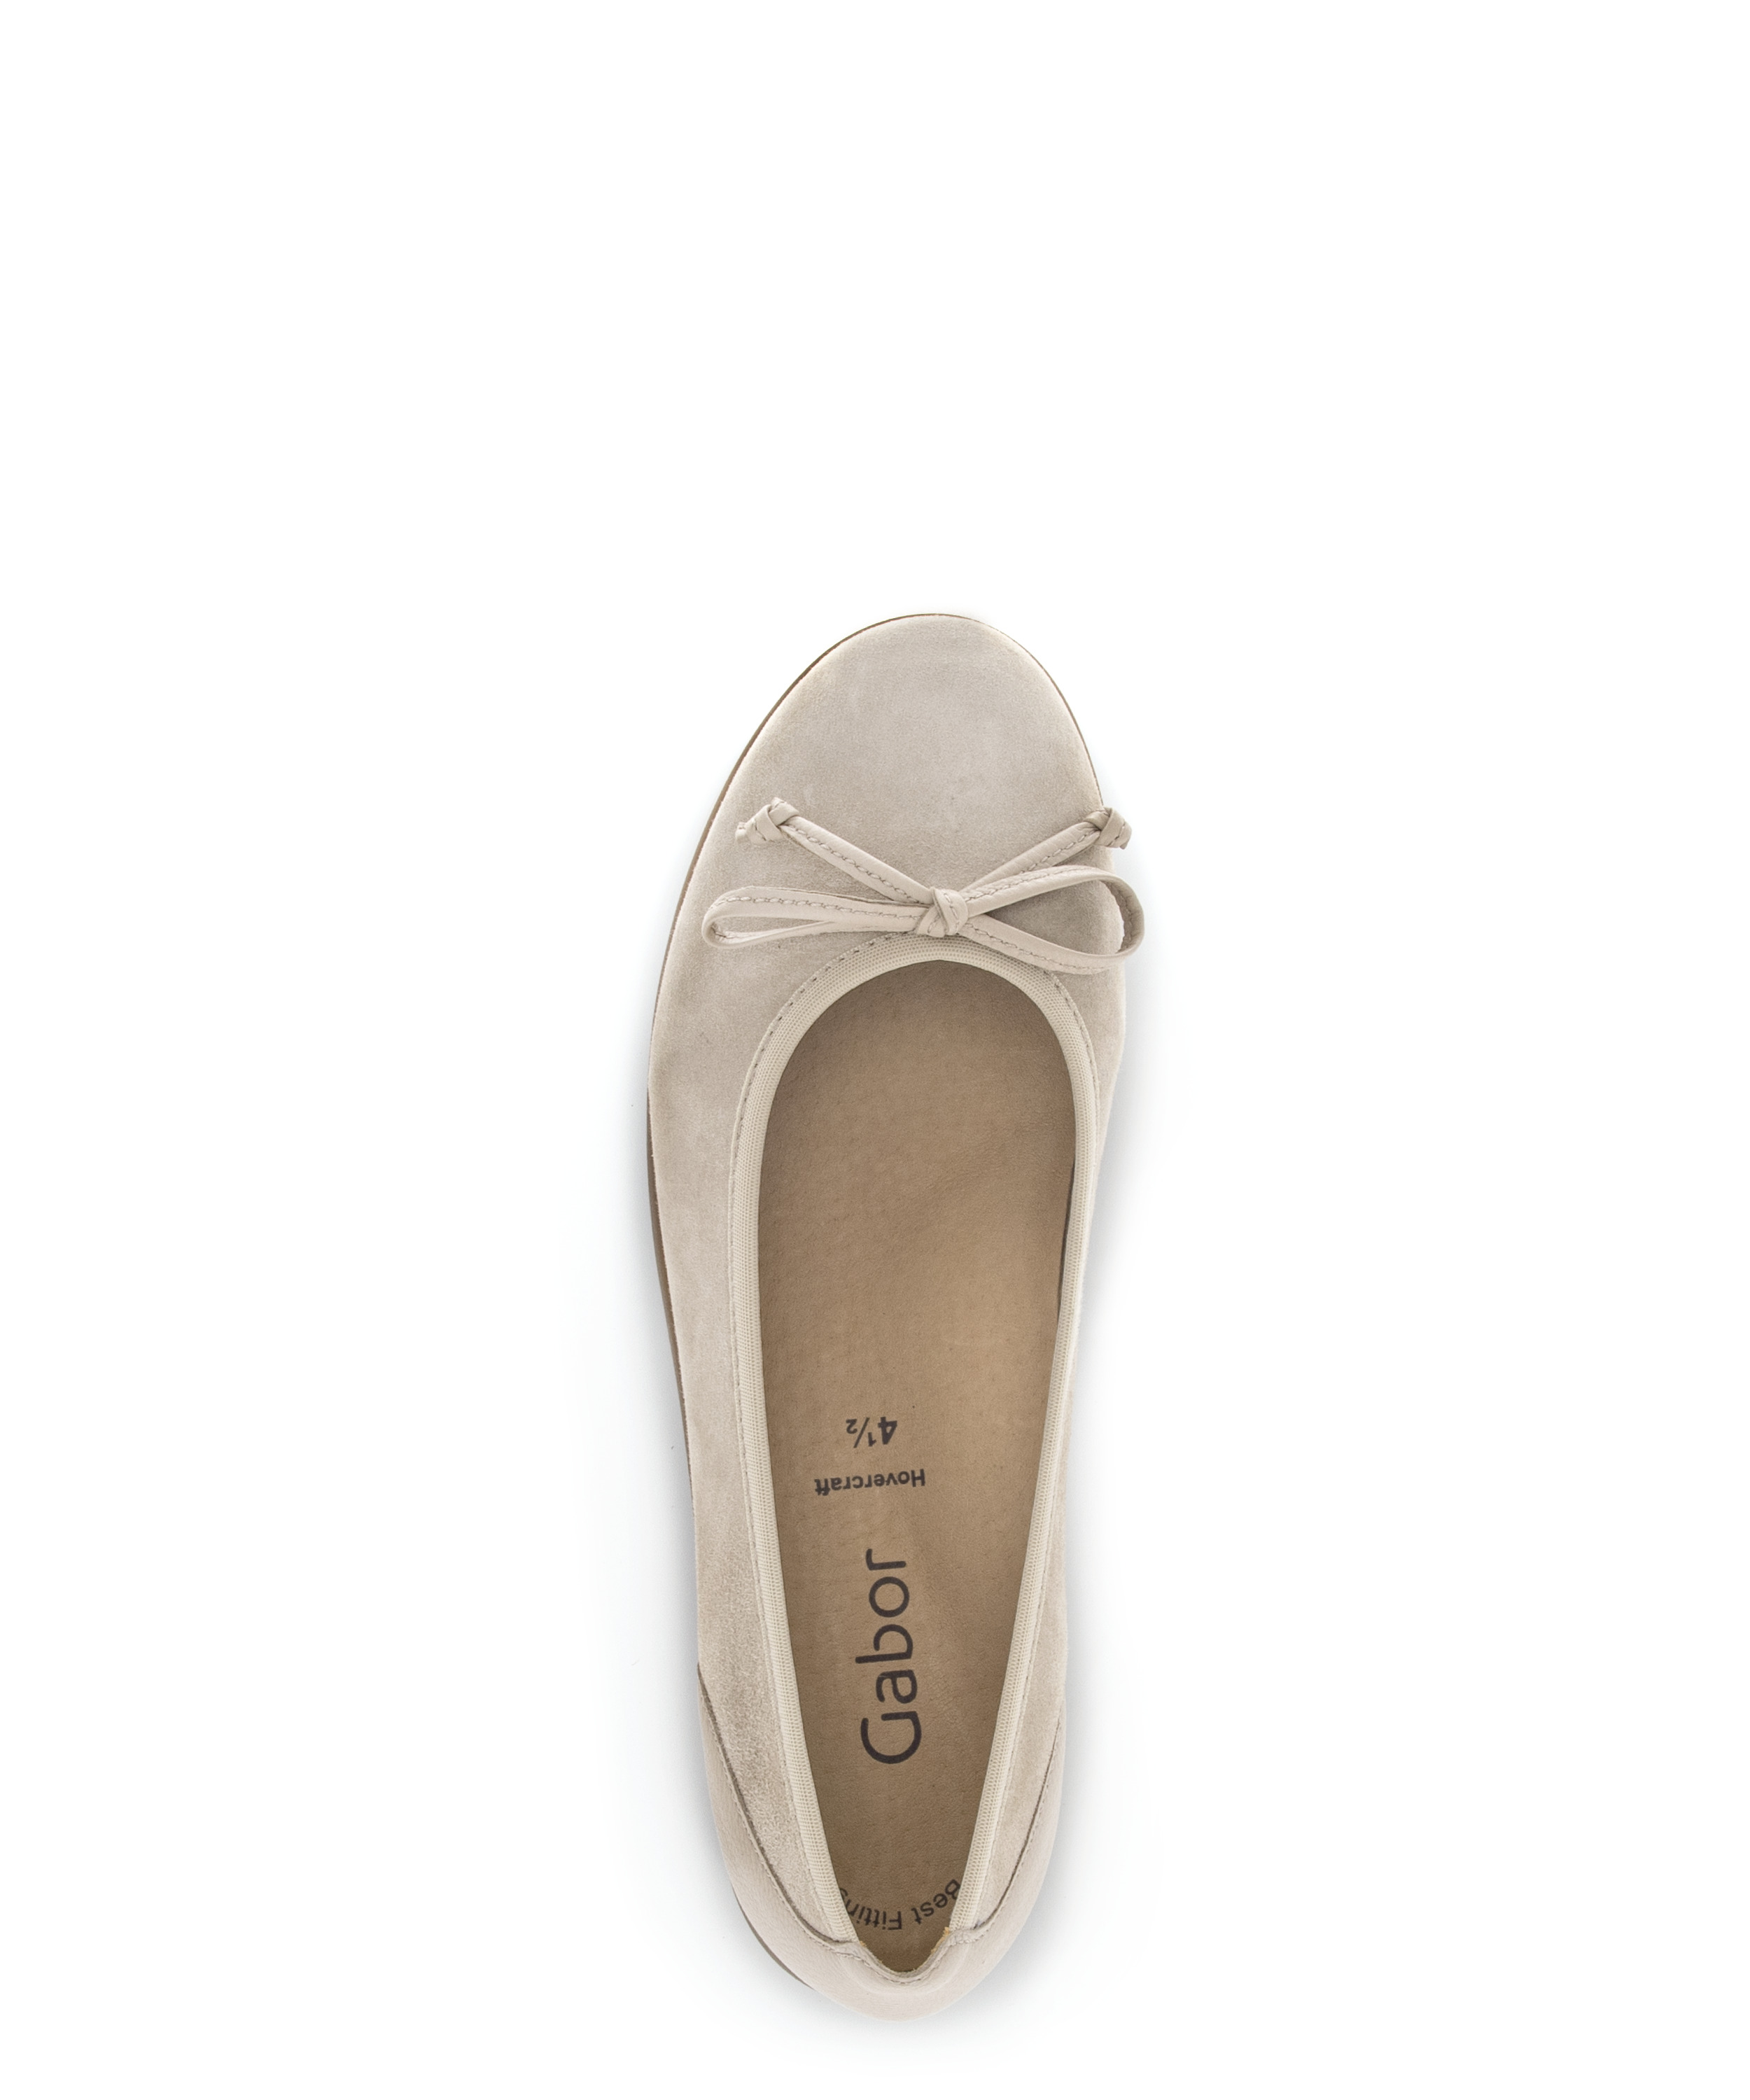 Gabor Shoes Ballerina - Beige suede leather